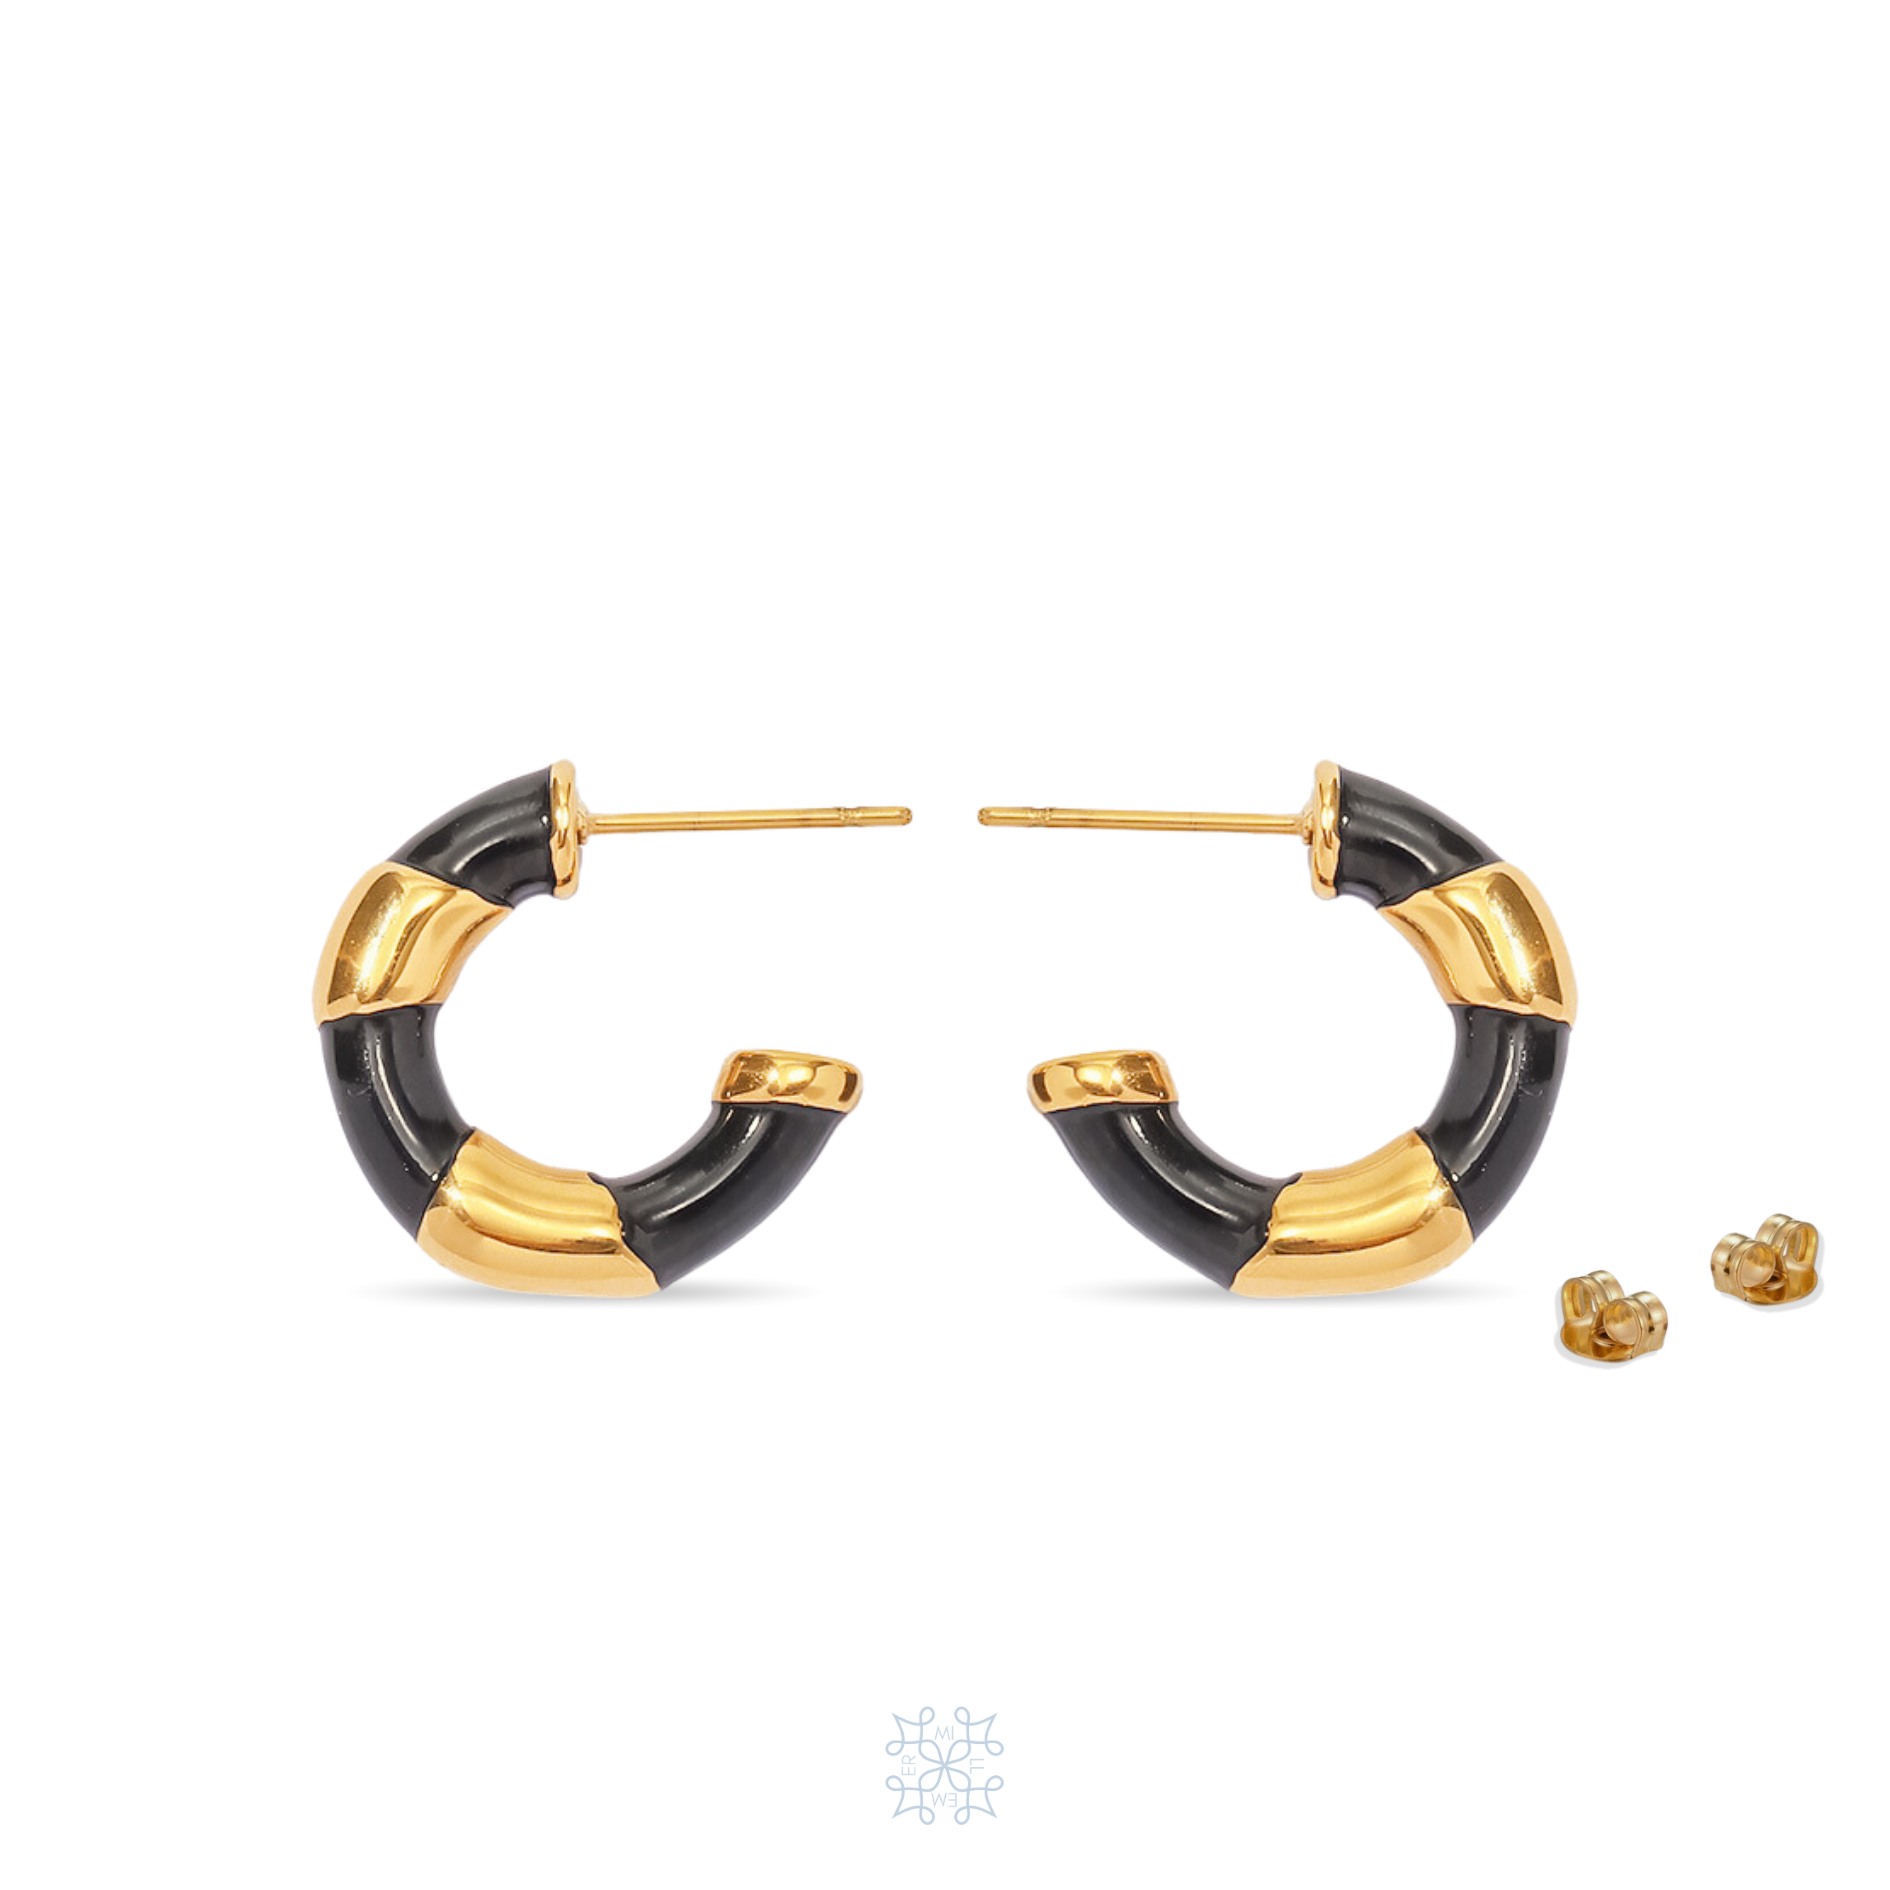 Gold hoop earrings painted with black enamel like a twisted ribbon around the gold hoop creating a two coloured hoop, black and gold hoop. RUBAN Black Hoop Gold Earrings.